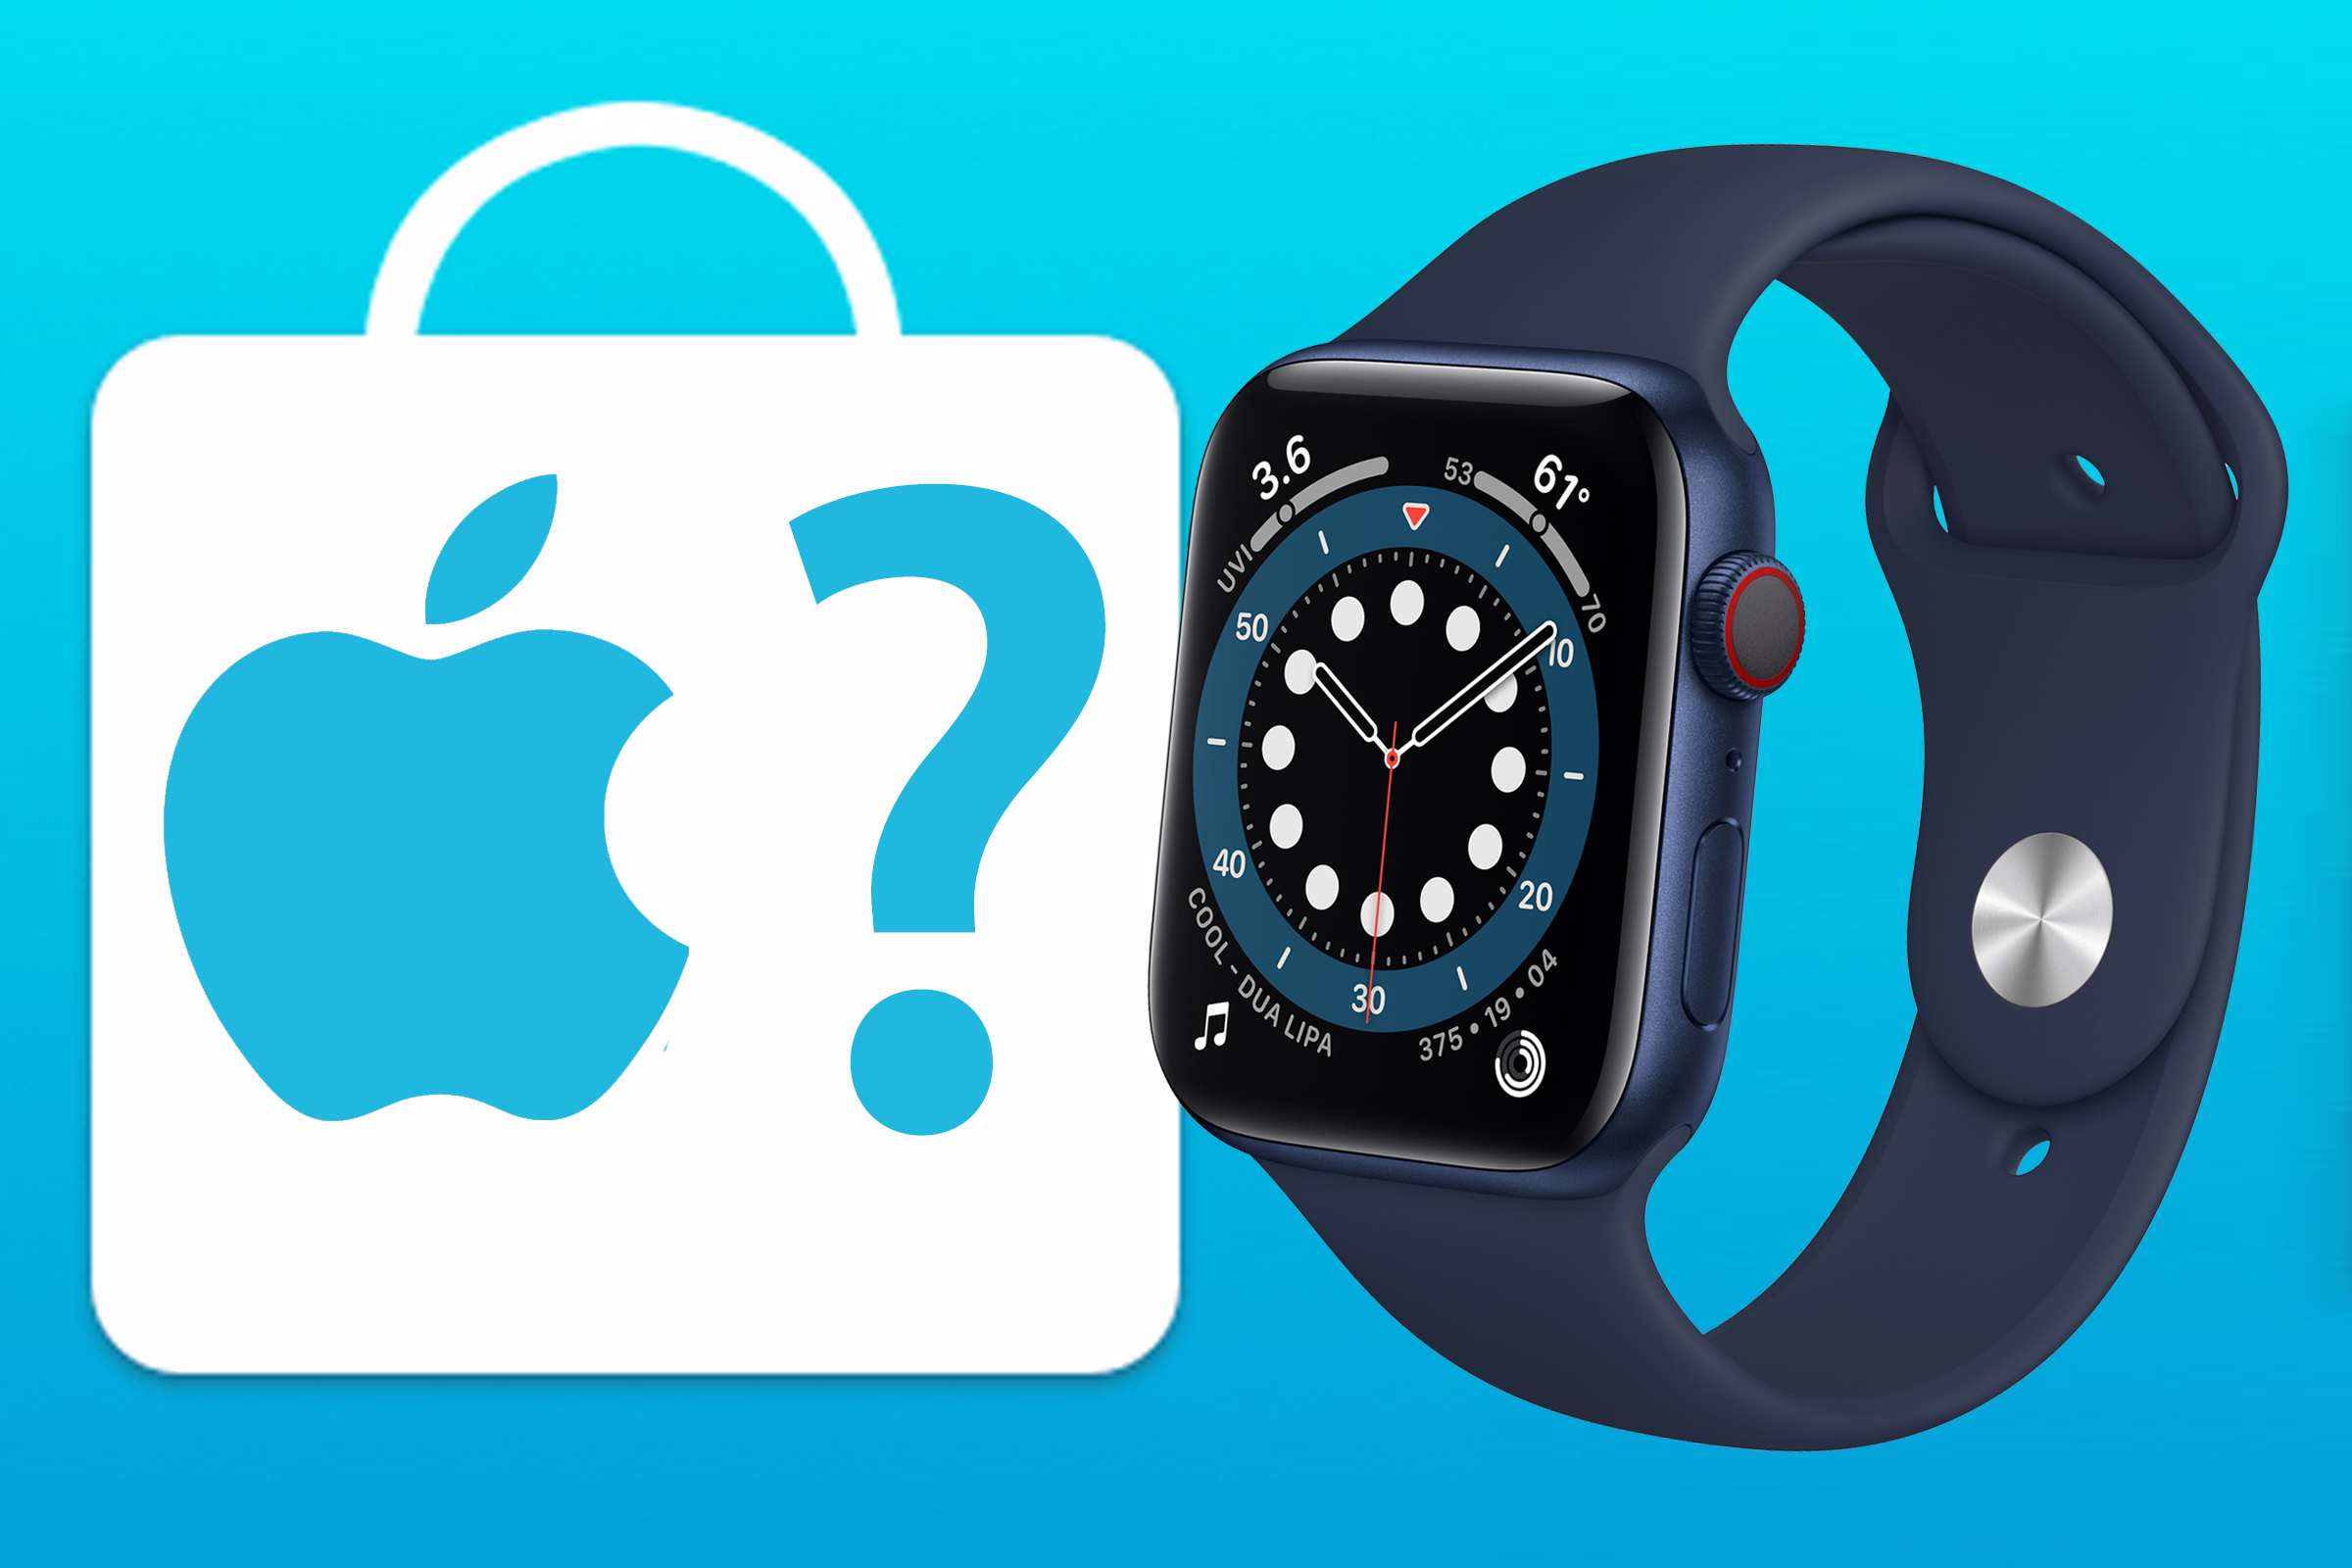 Apple Watch: Buy now or wait?